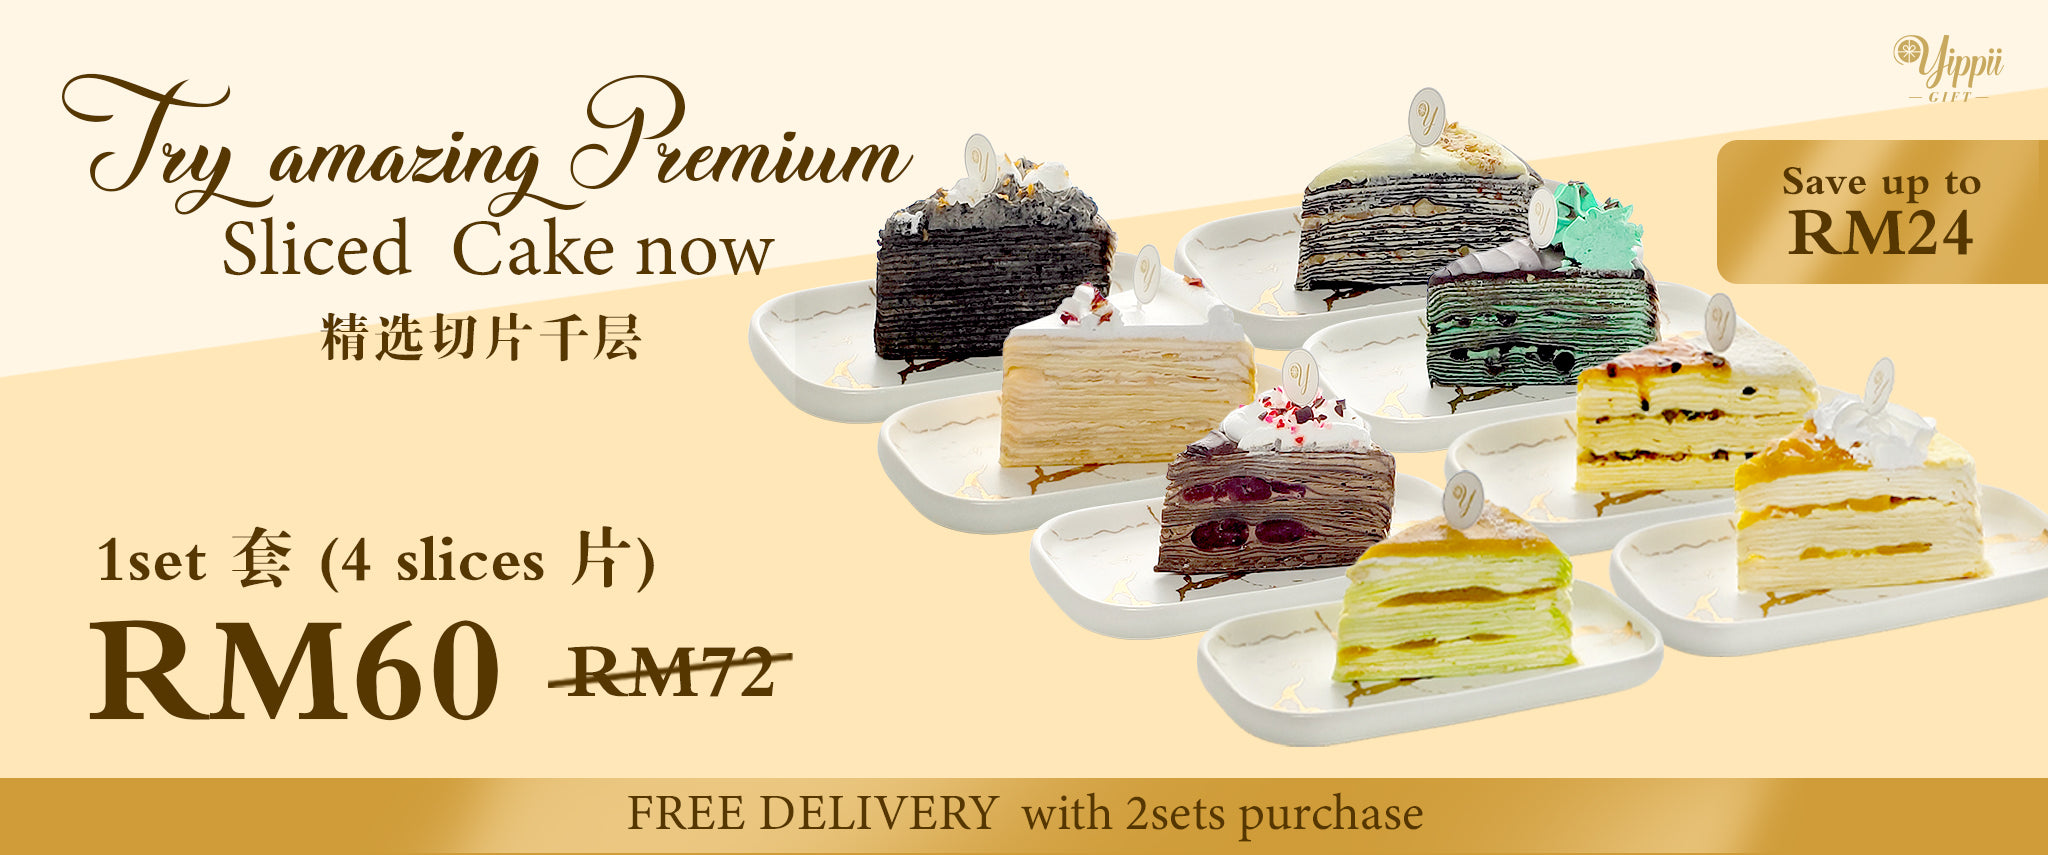 Yippii Gift | Premium Sliced Cake